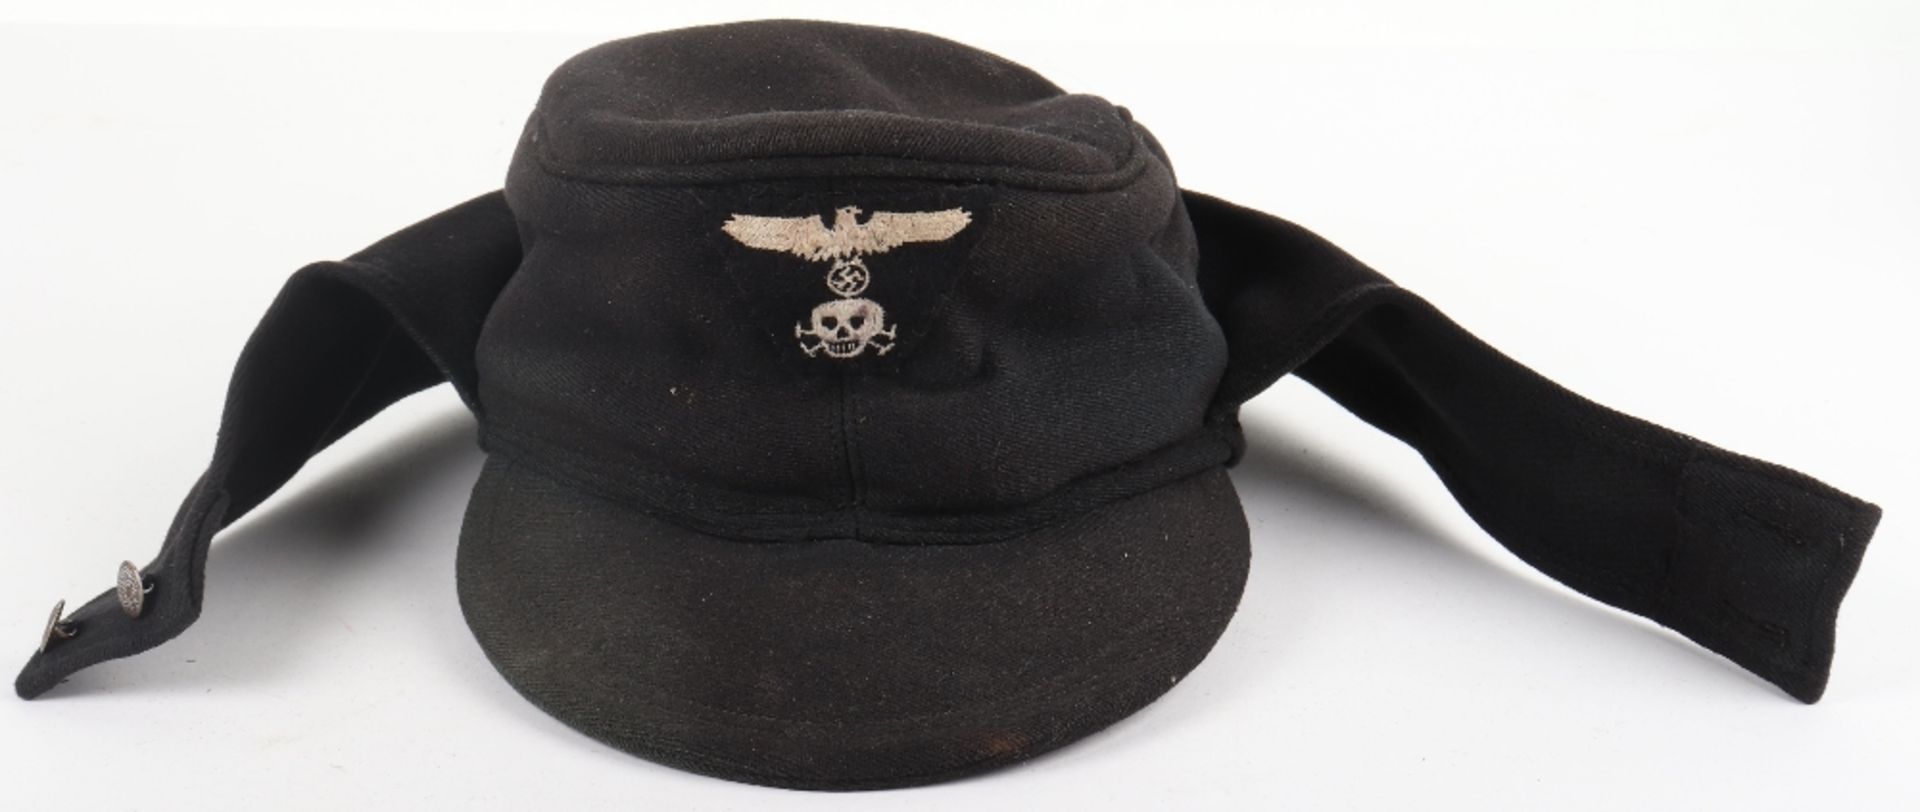 WW2 Style German Hats - Image 13 of 22